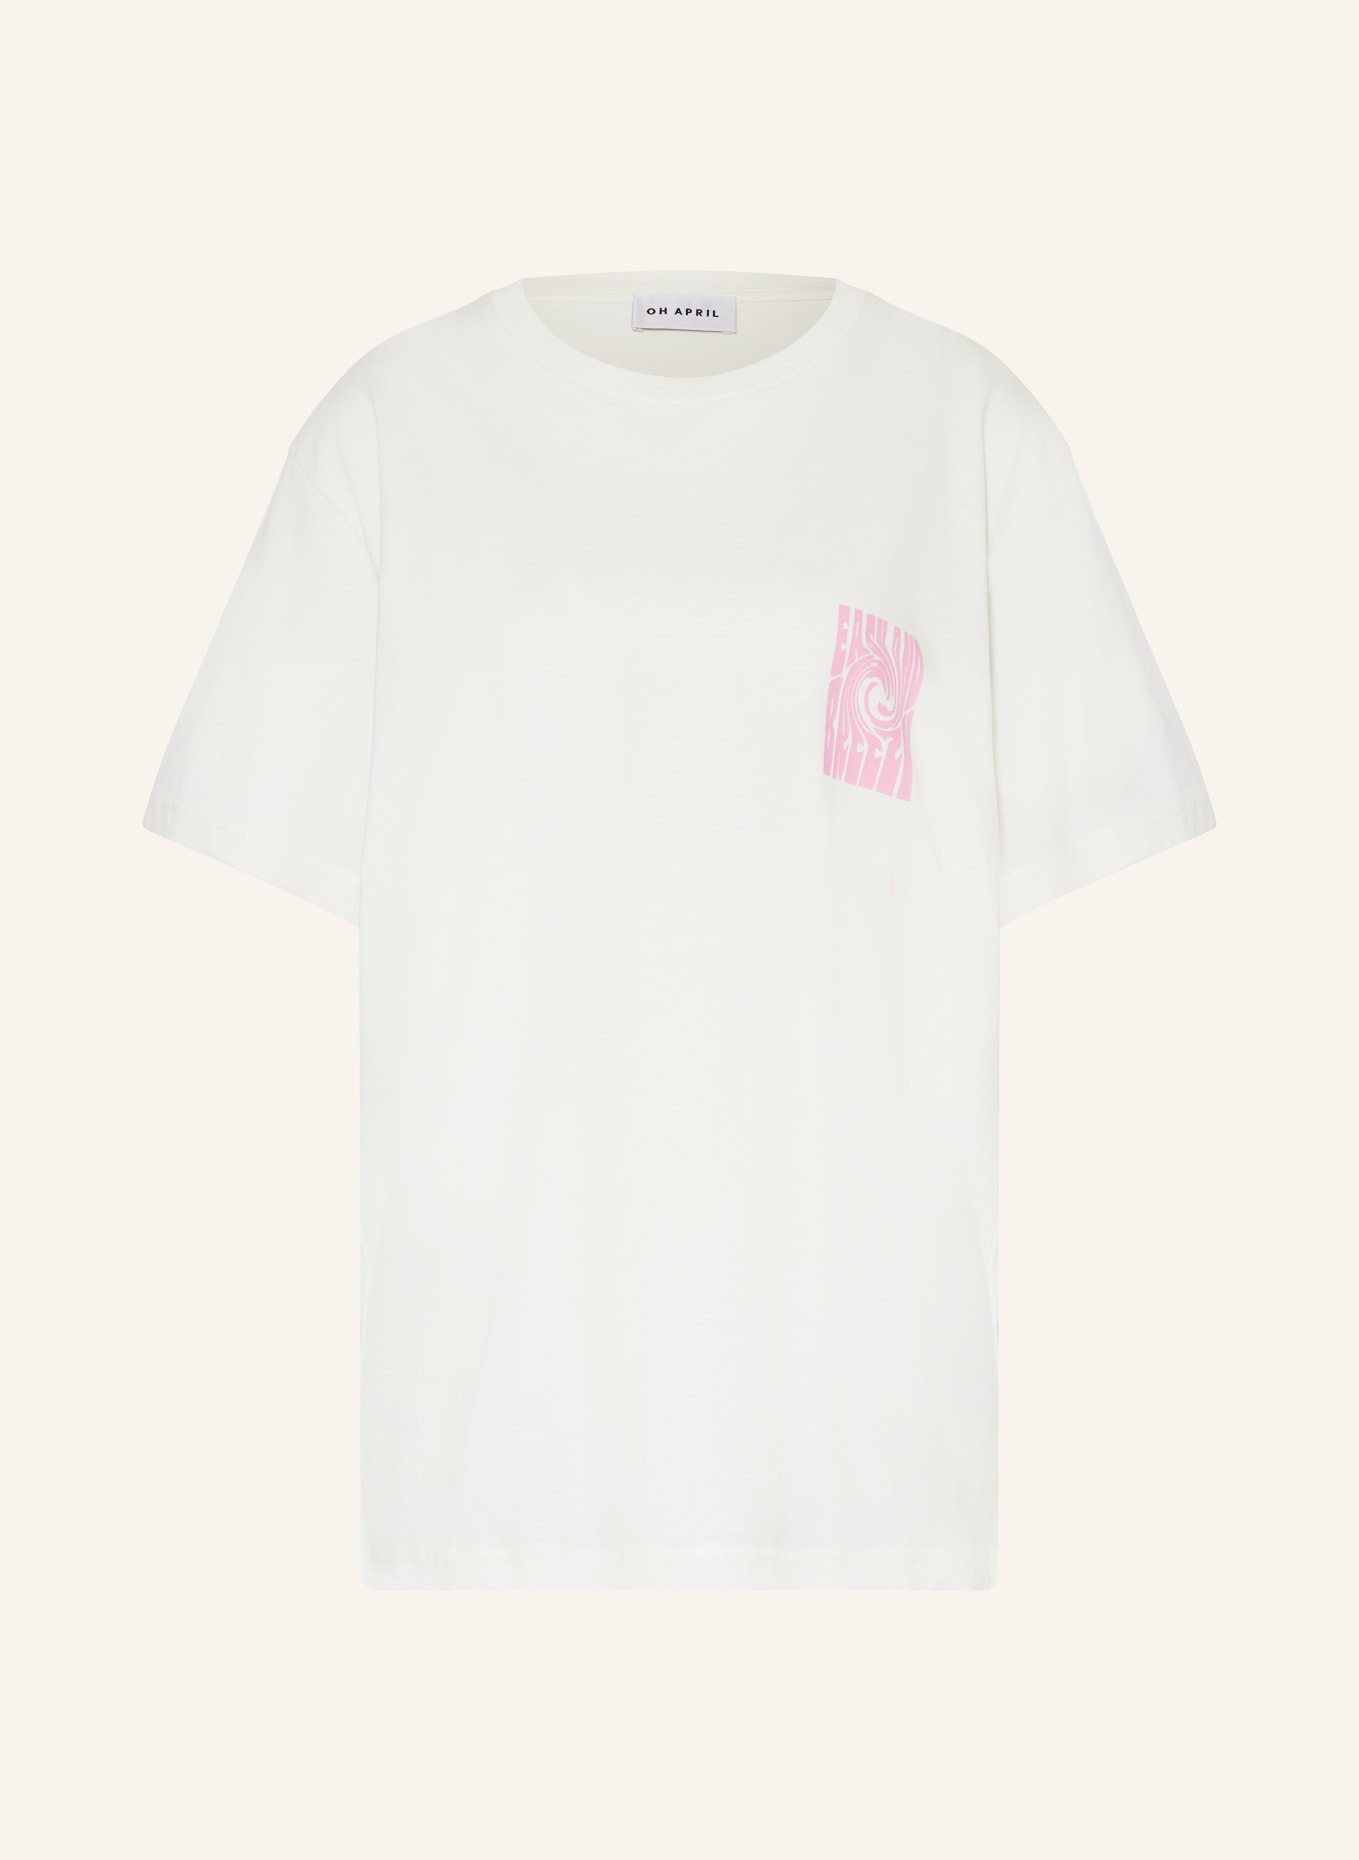 OH APRIL T-Shirt BOYFRIEND, Farbe: WEISS/ PINK (Bild 1)